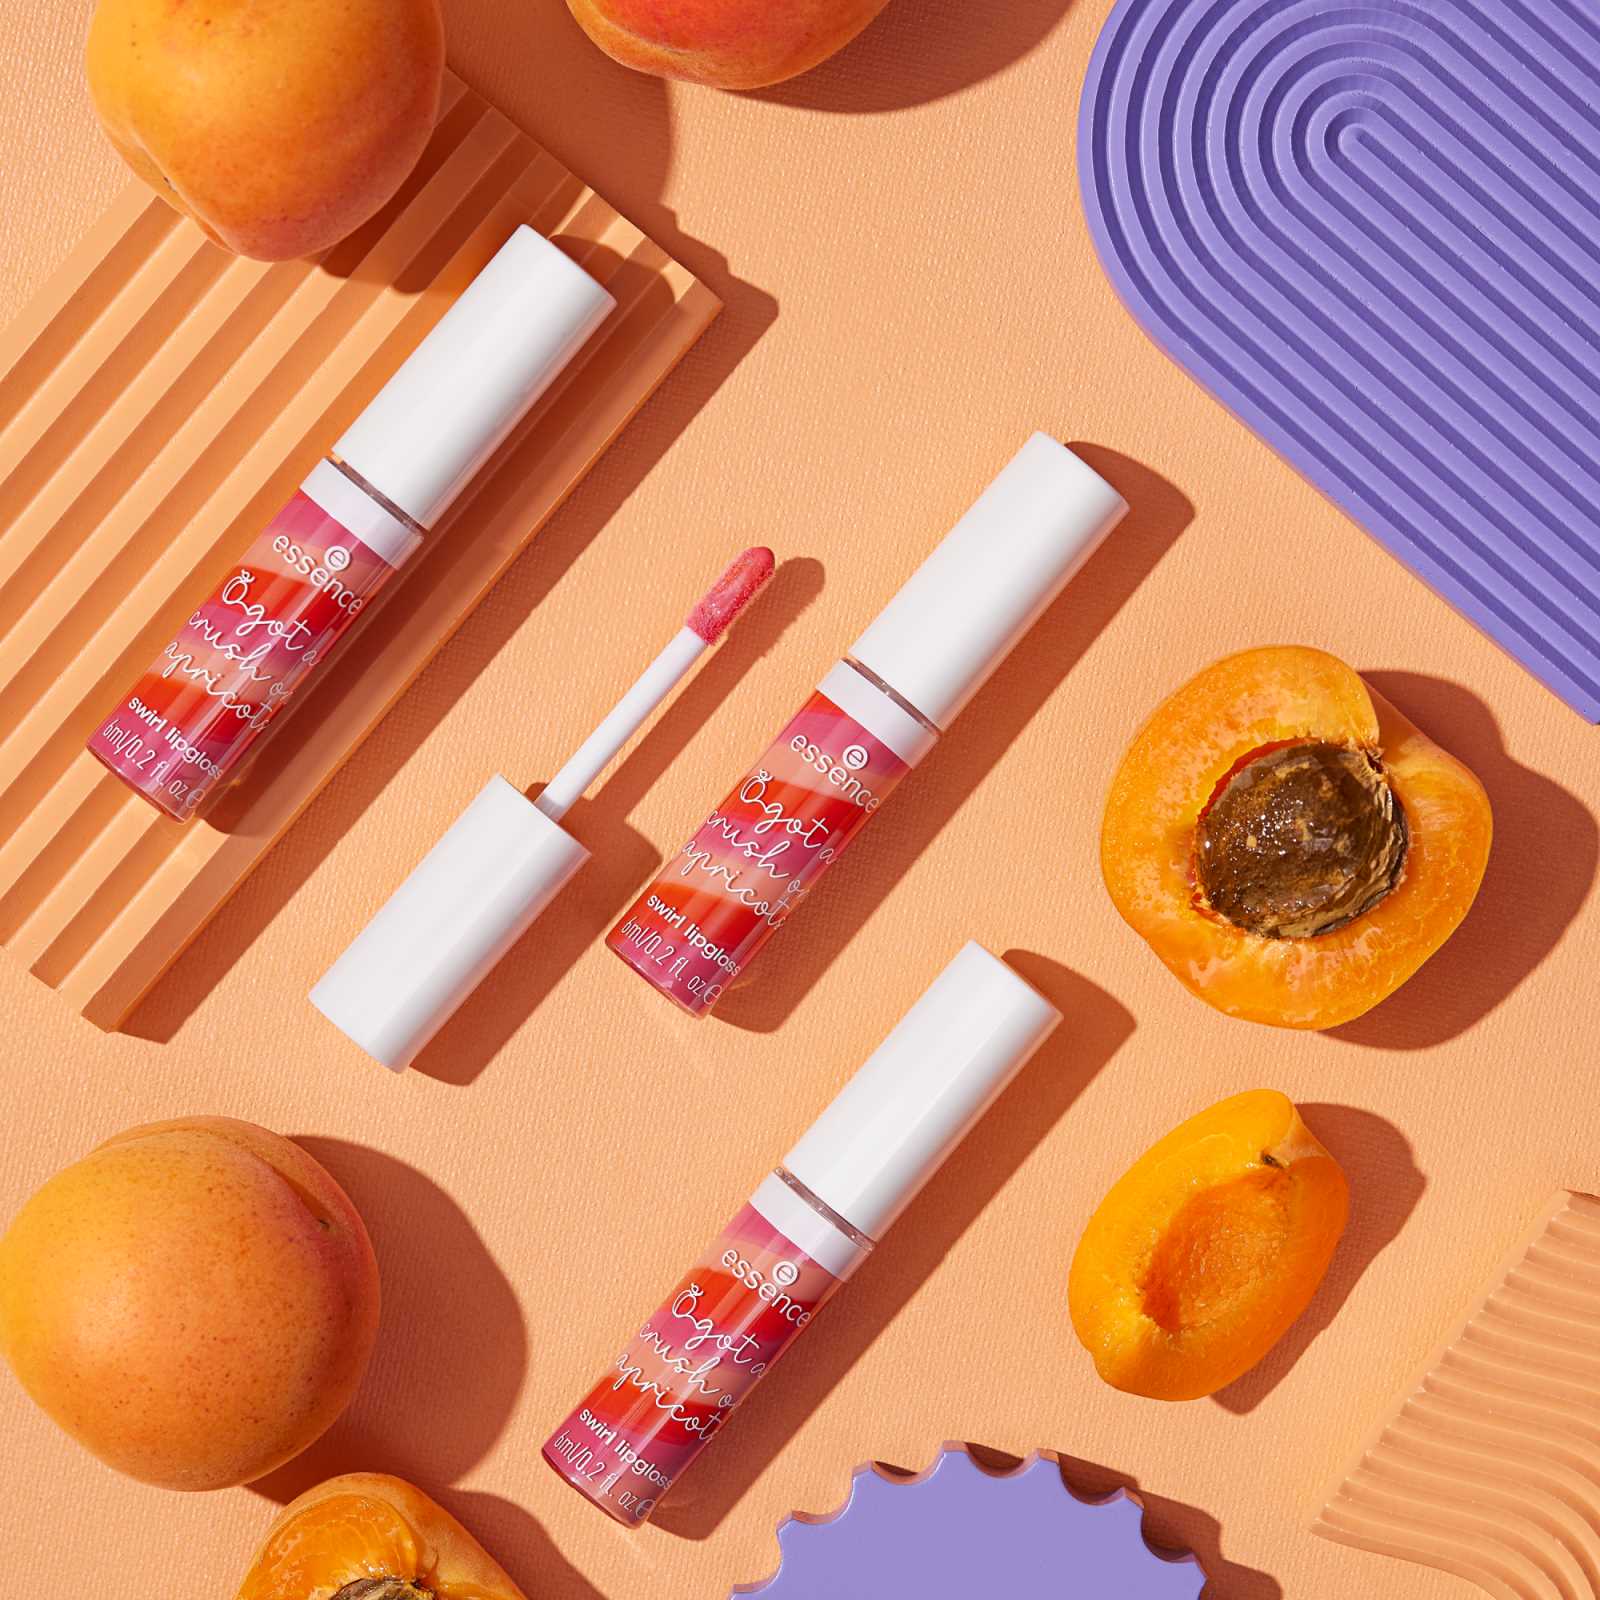 Zablistaj uz novu trendovsku kolekciju: "got a crush on apricots"